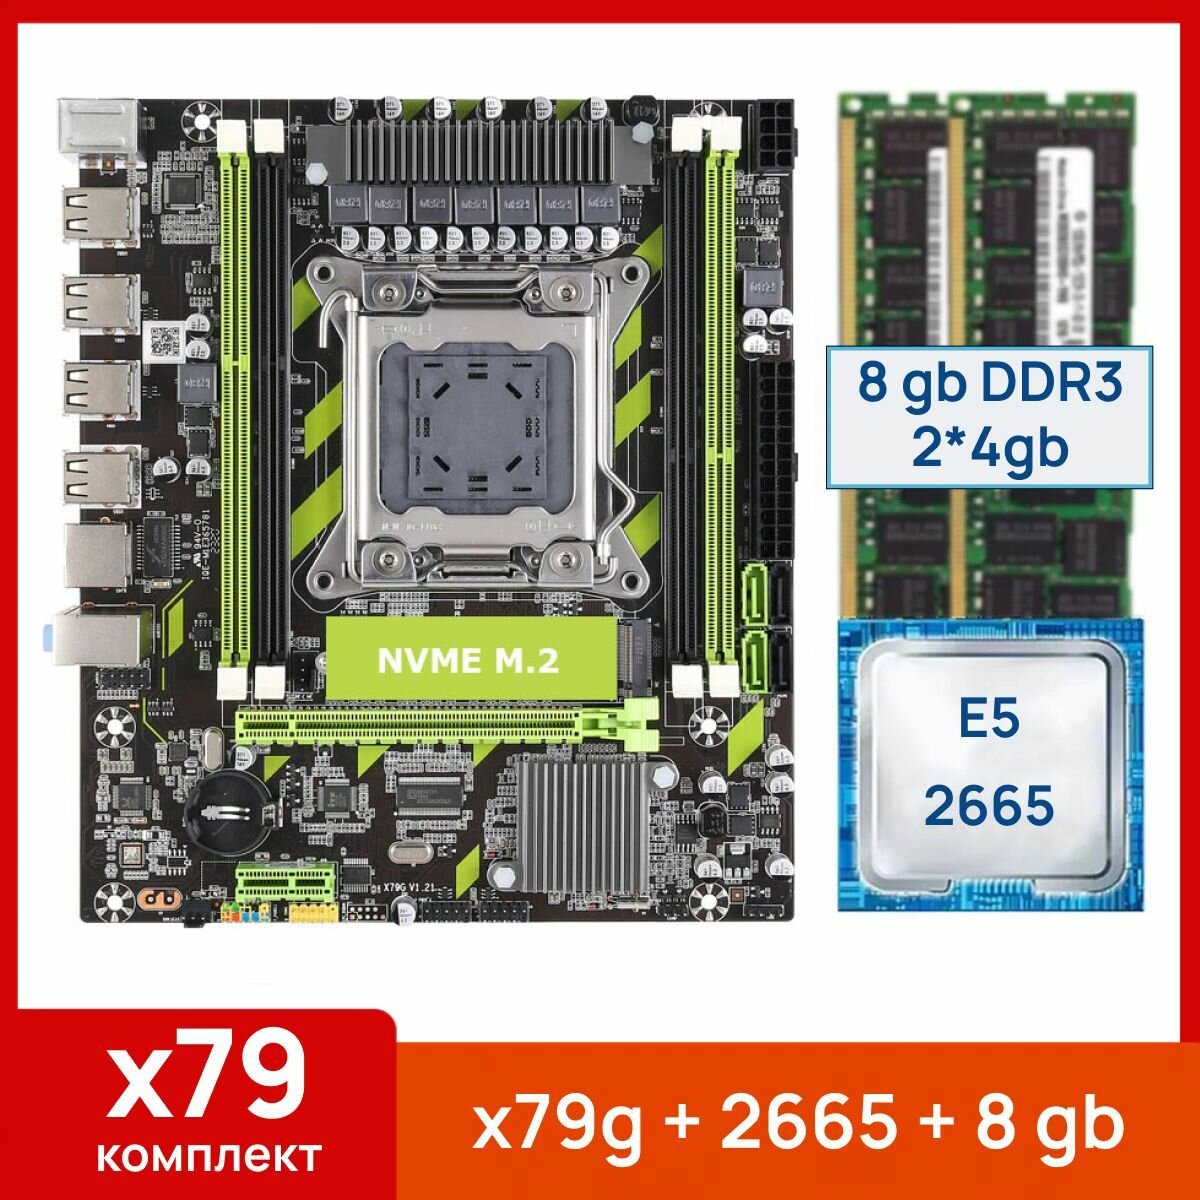 Комплект: Atermiter x79g + Xeon E5 2665 + 8 gb(2x4gb) DDR3 ecc reg